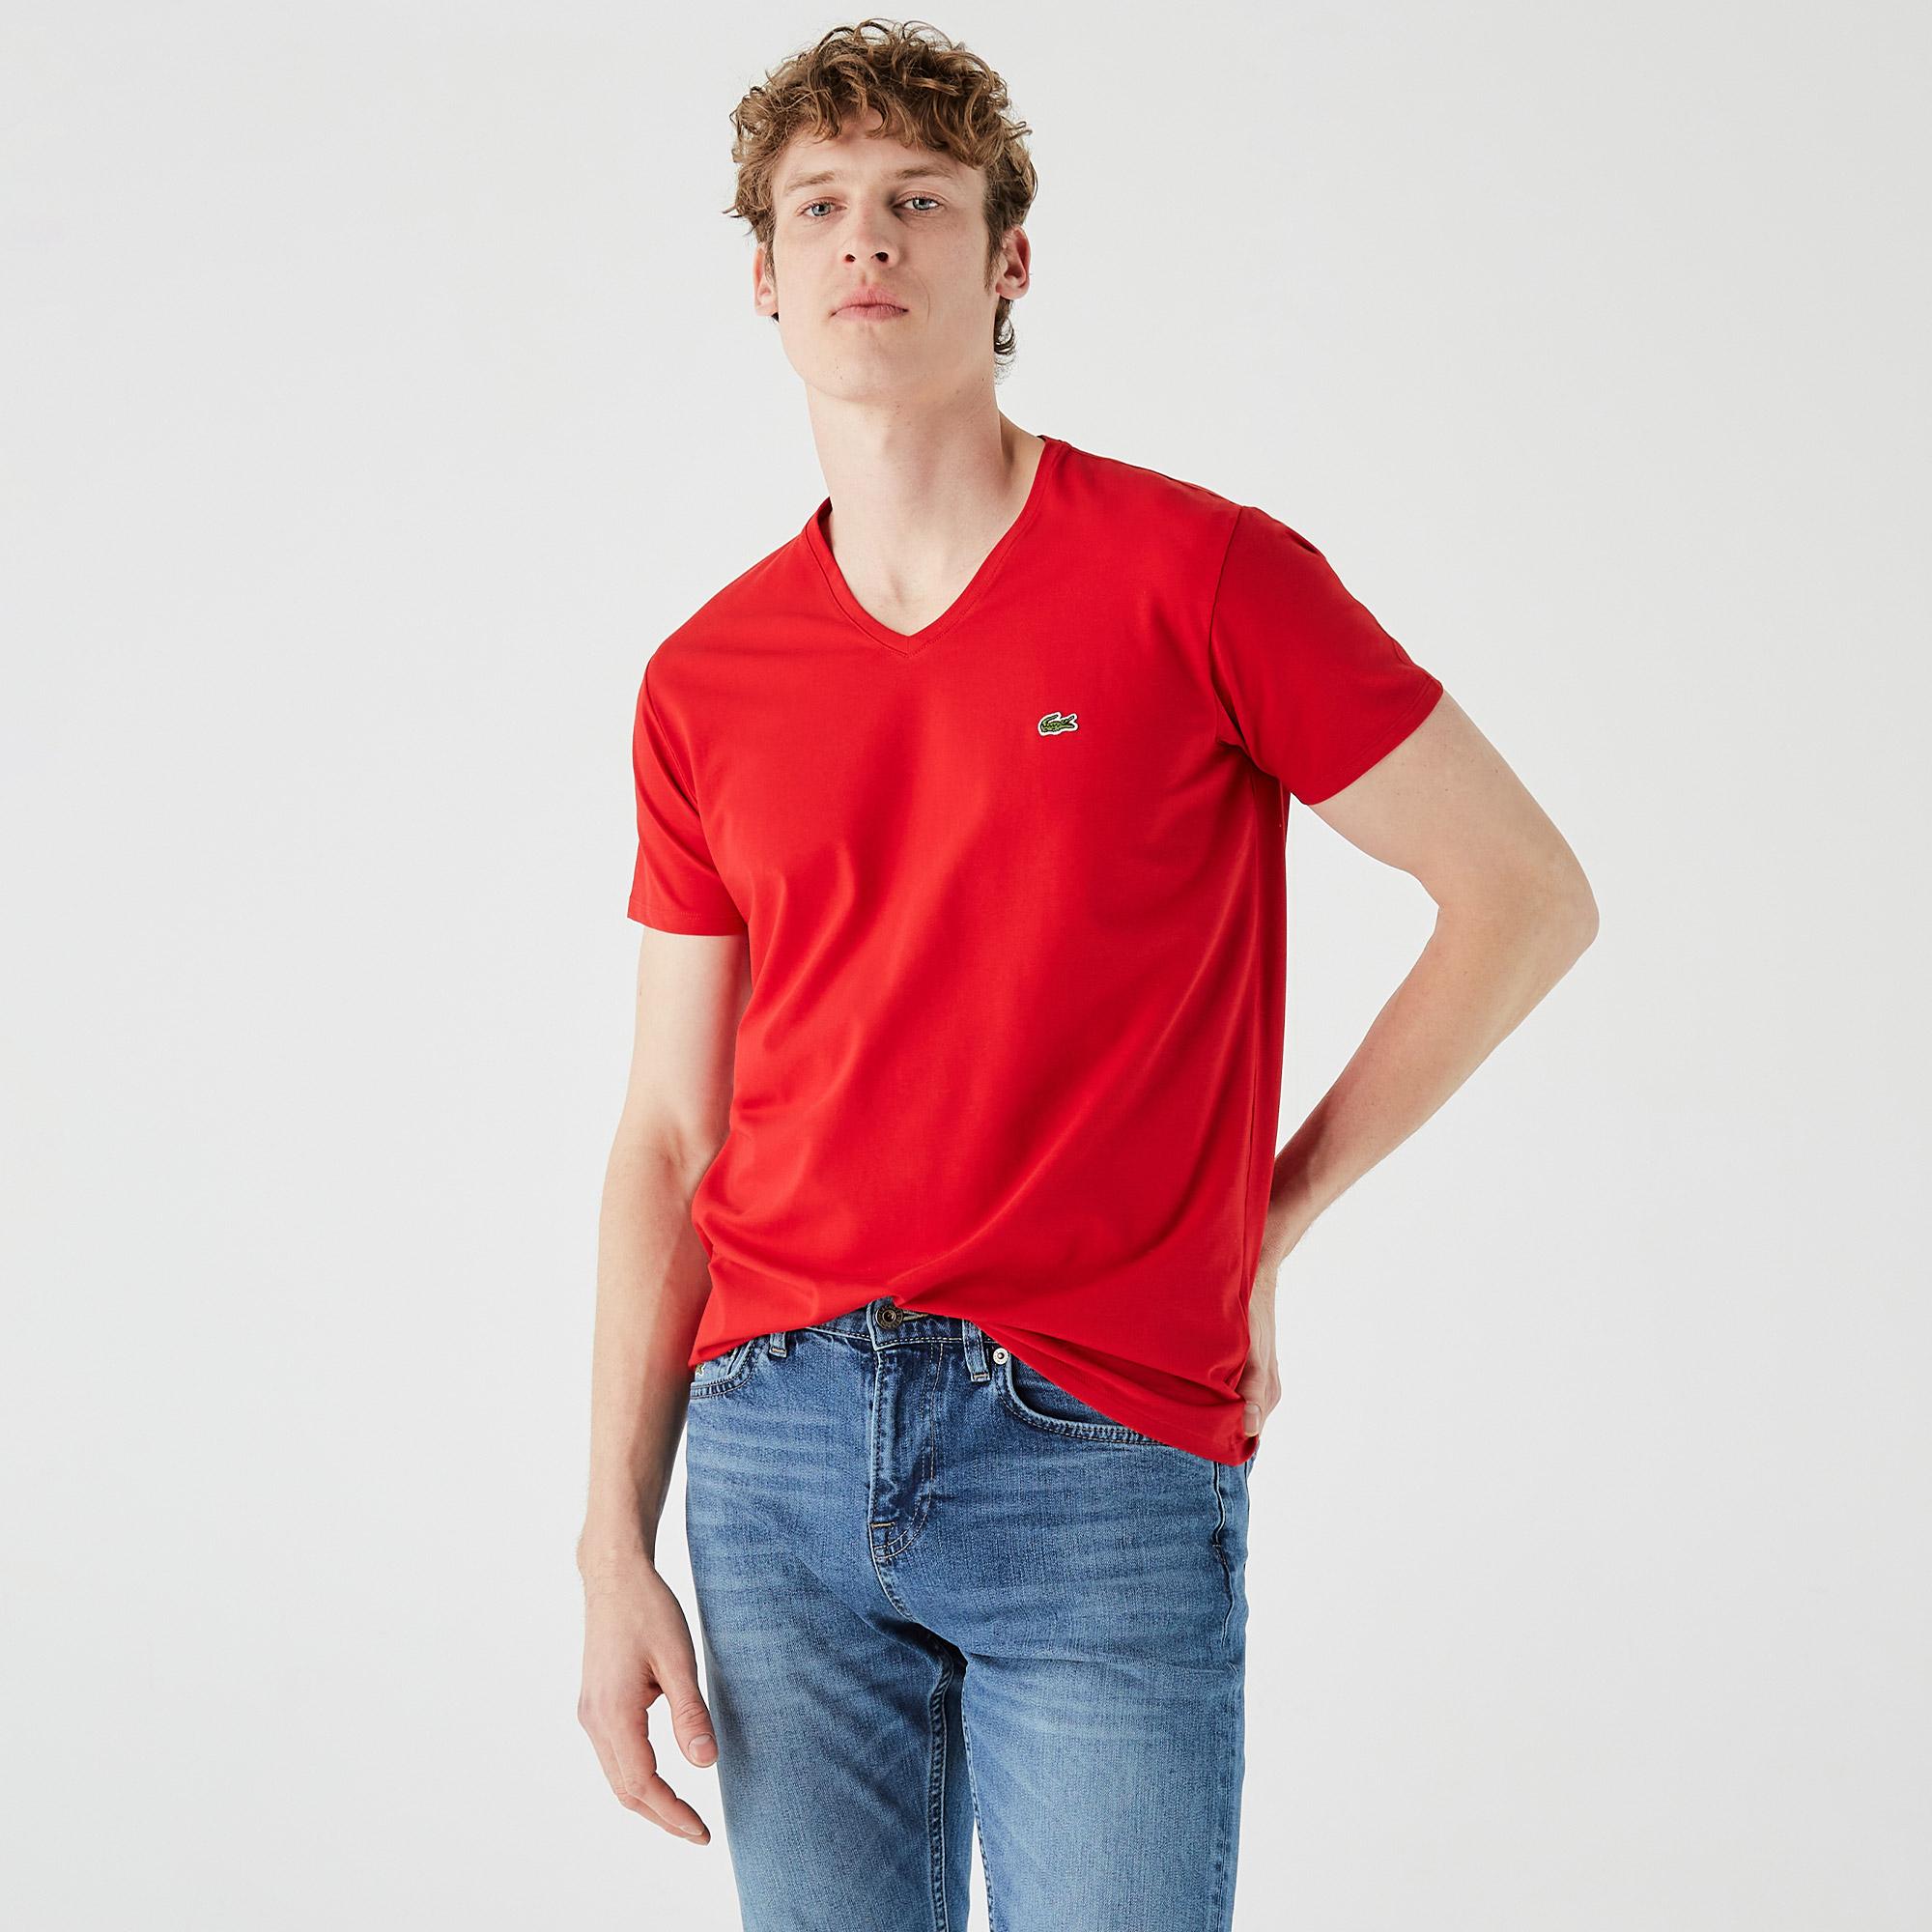 Lacoste Erkek Slim Fit V Yaka Kırmızı T-Shirt. 4